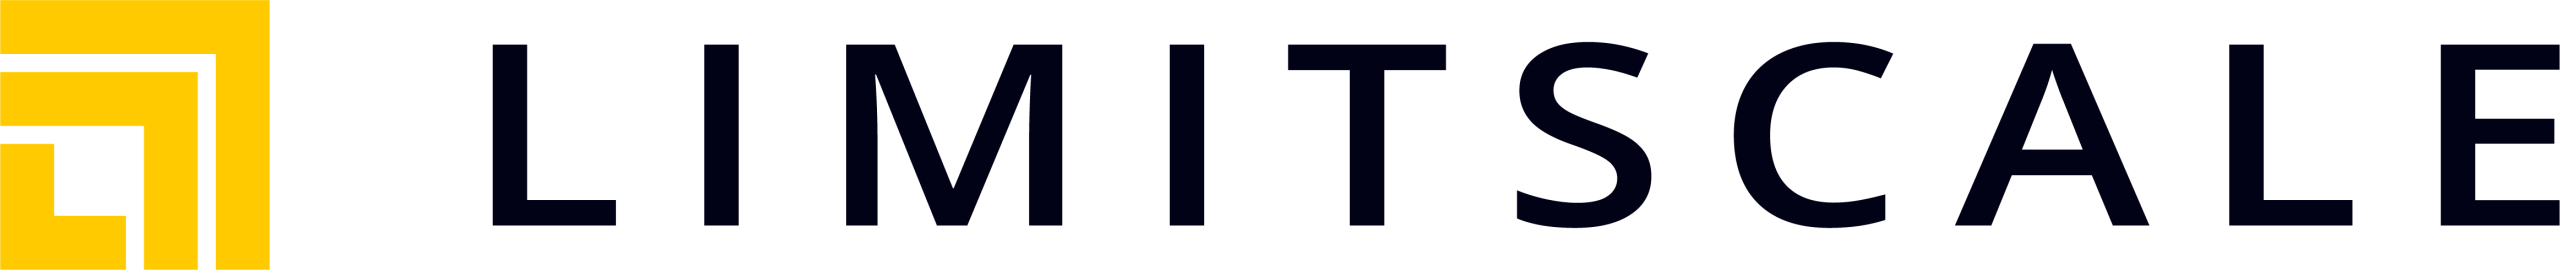 Limitscale-Black-Logo